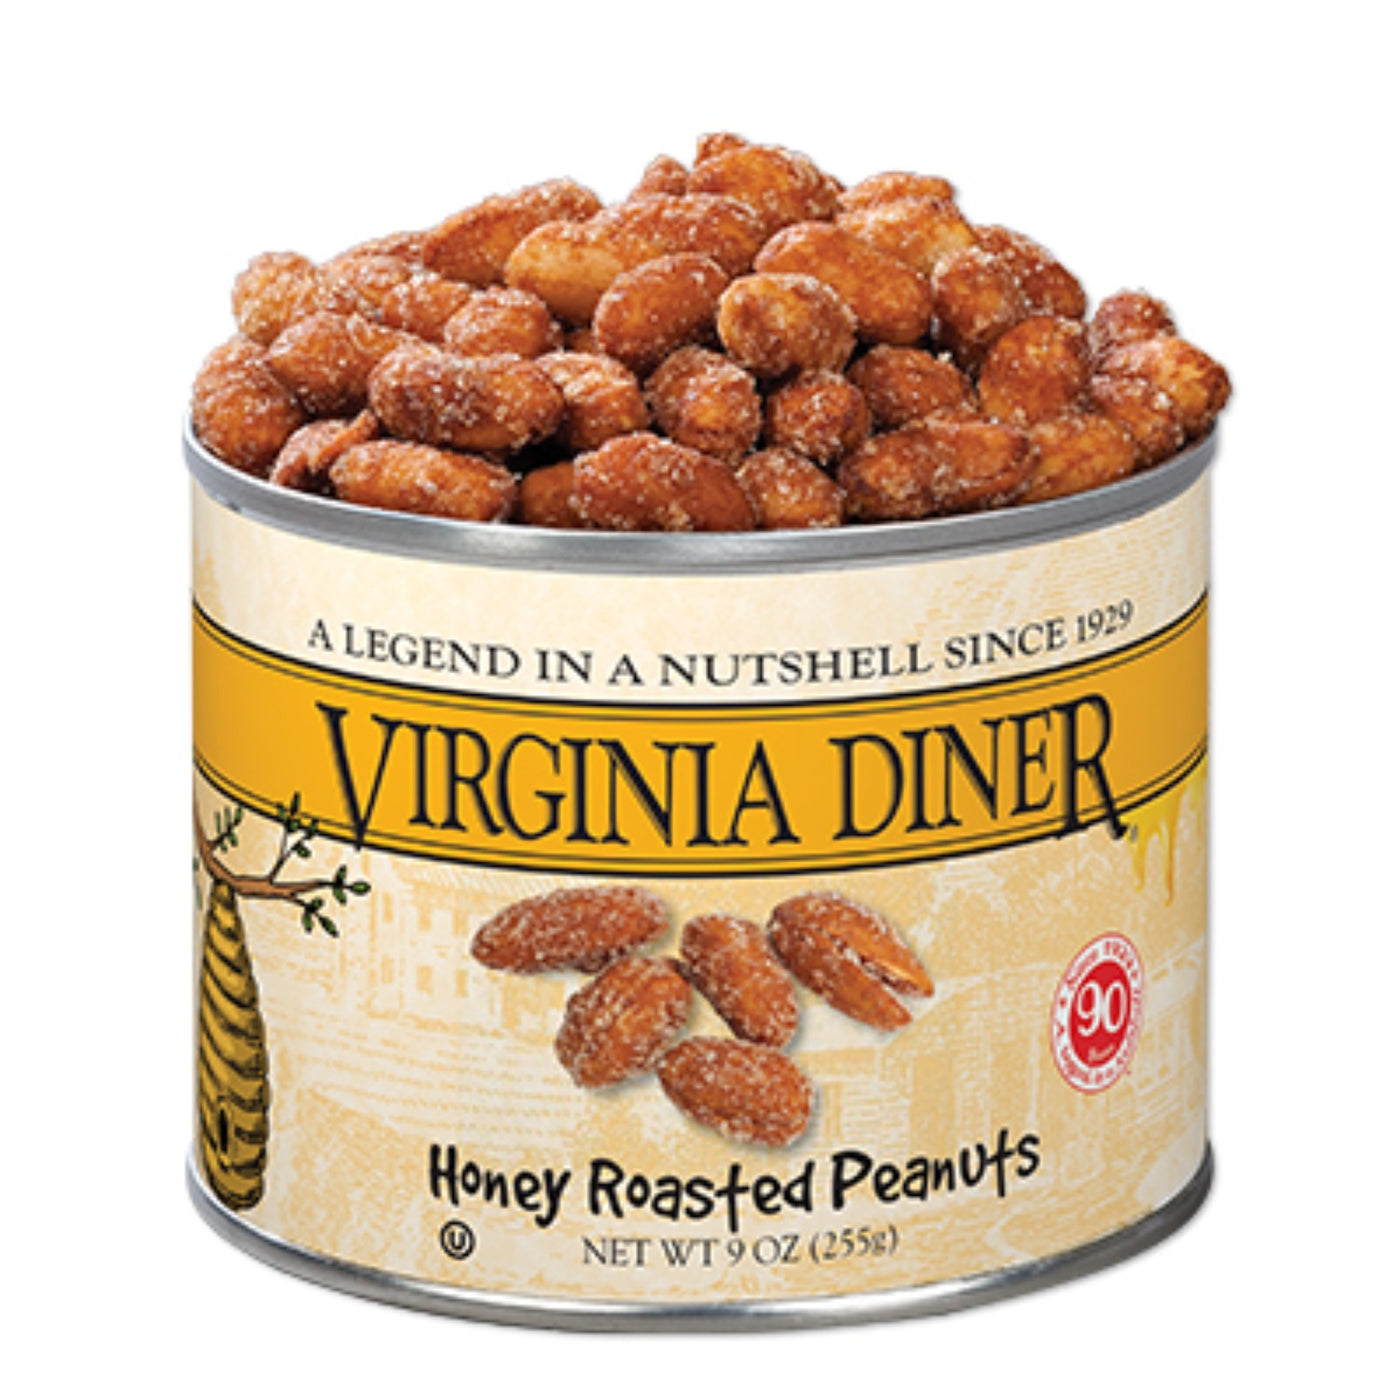 NUTS - Virginia Diner - Honey Roasted Peanuts